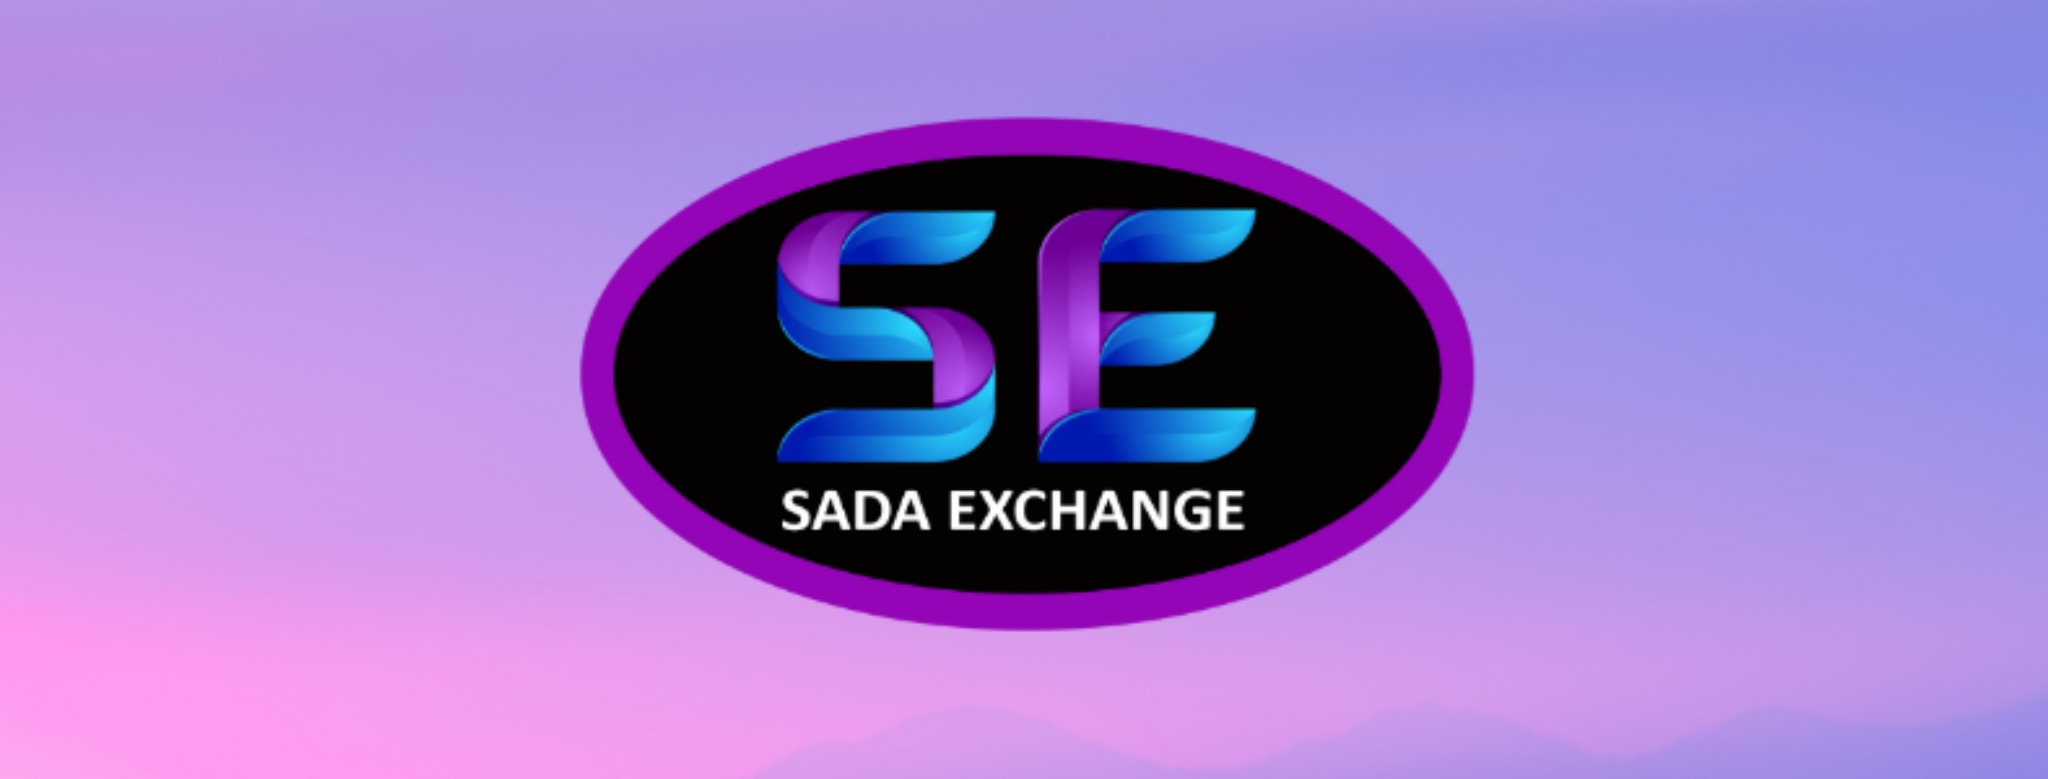 SADA Exchange - SADA Services, LLC